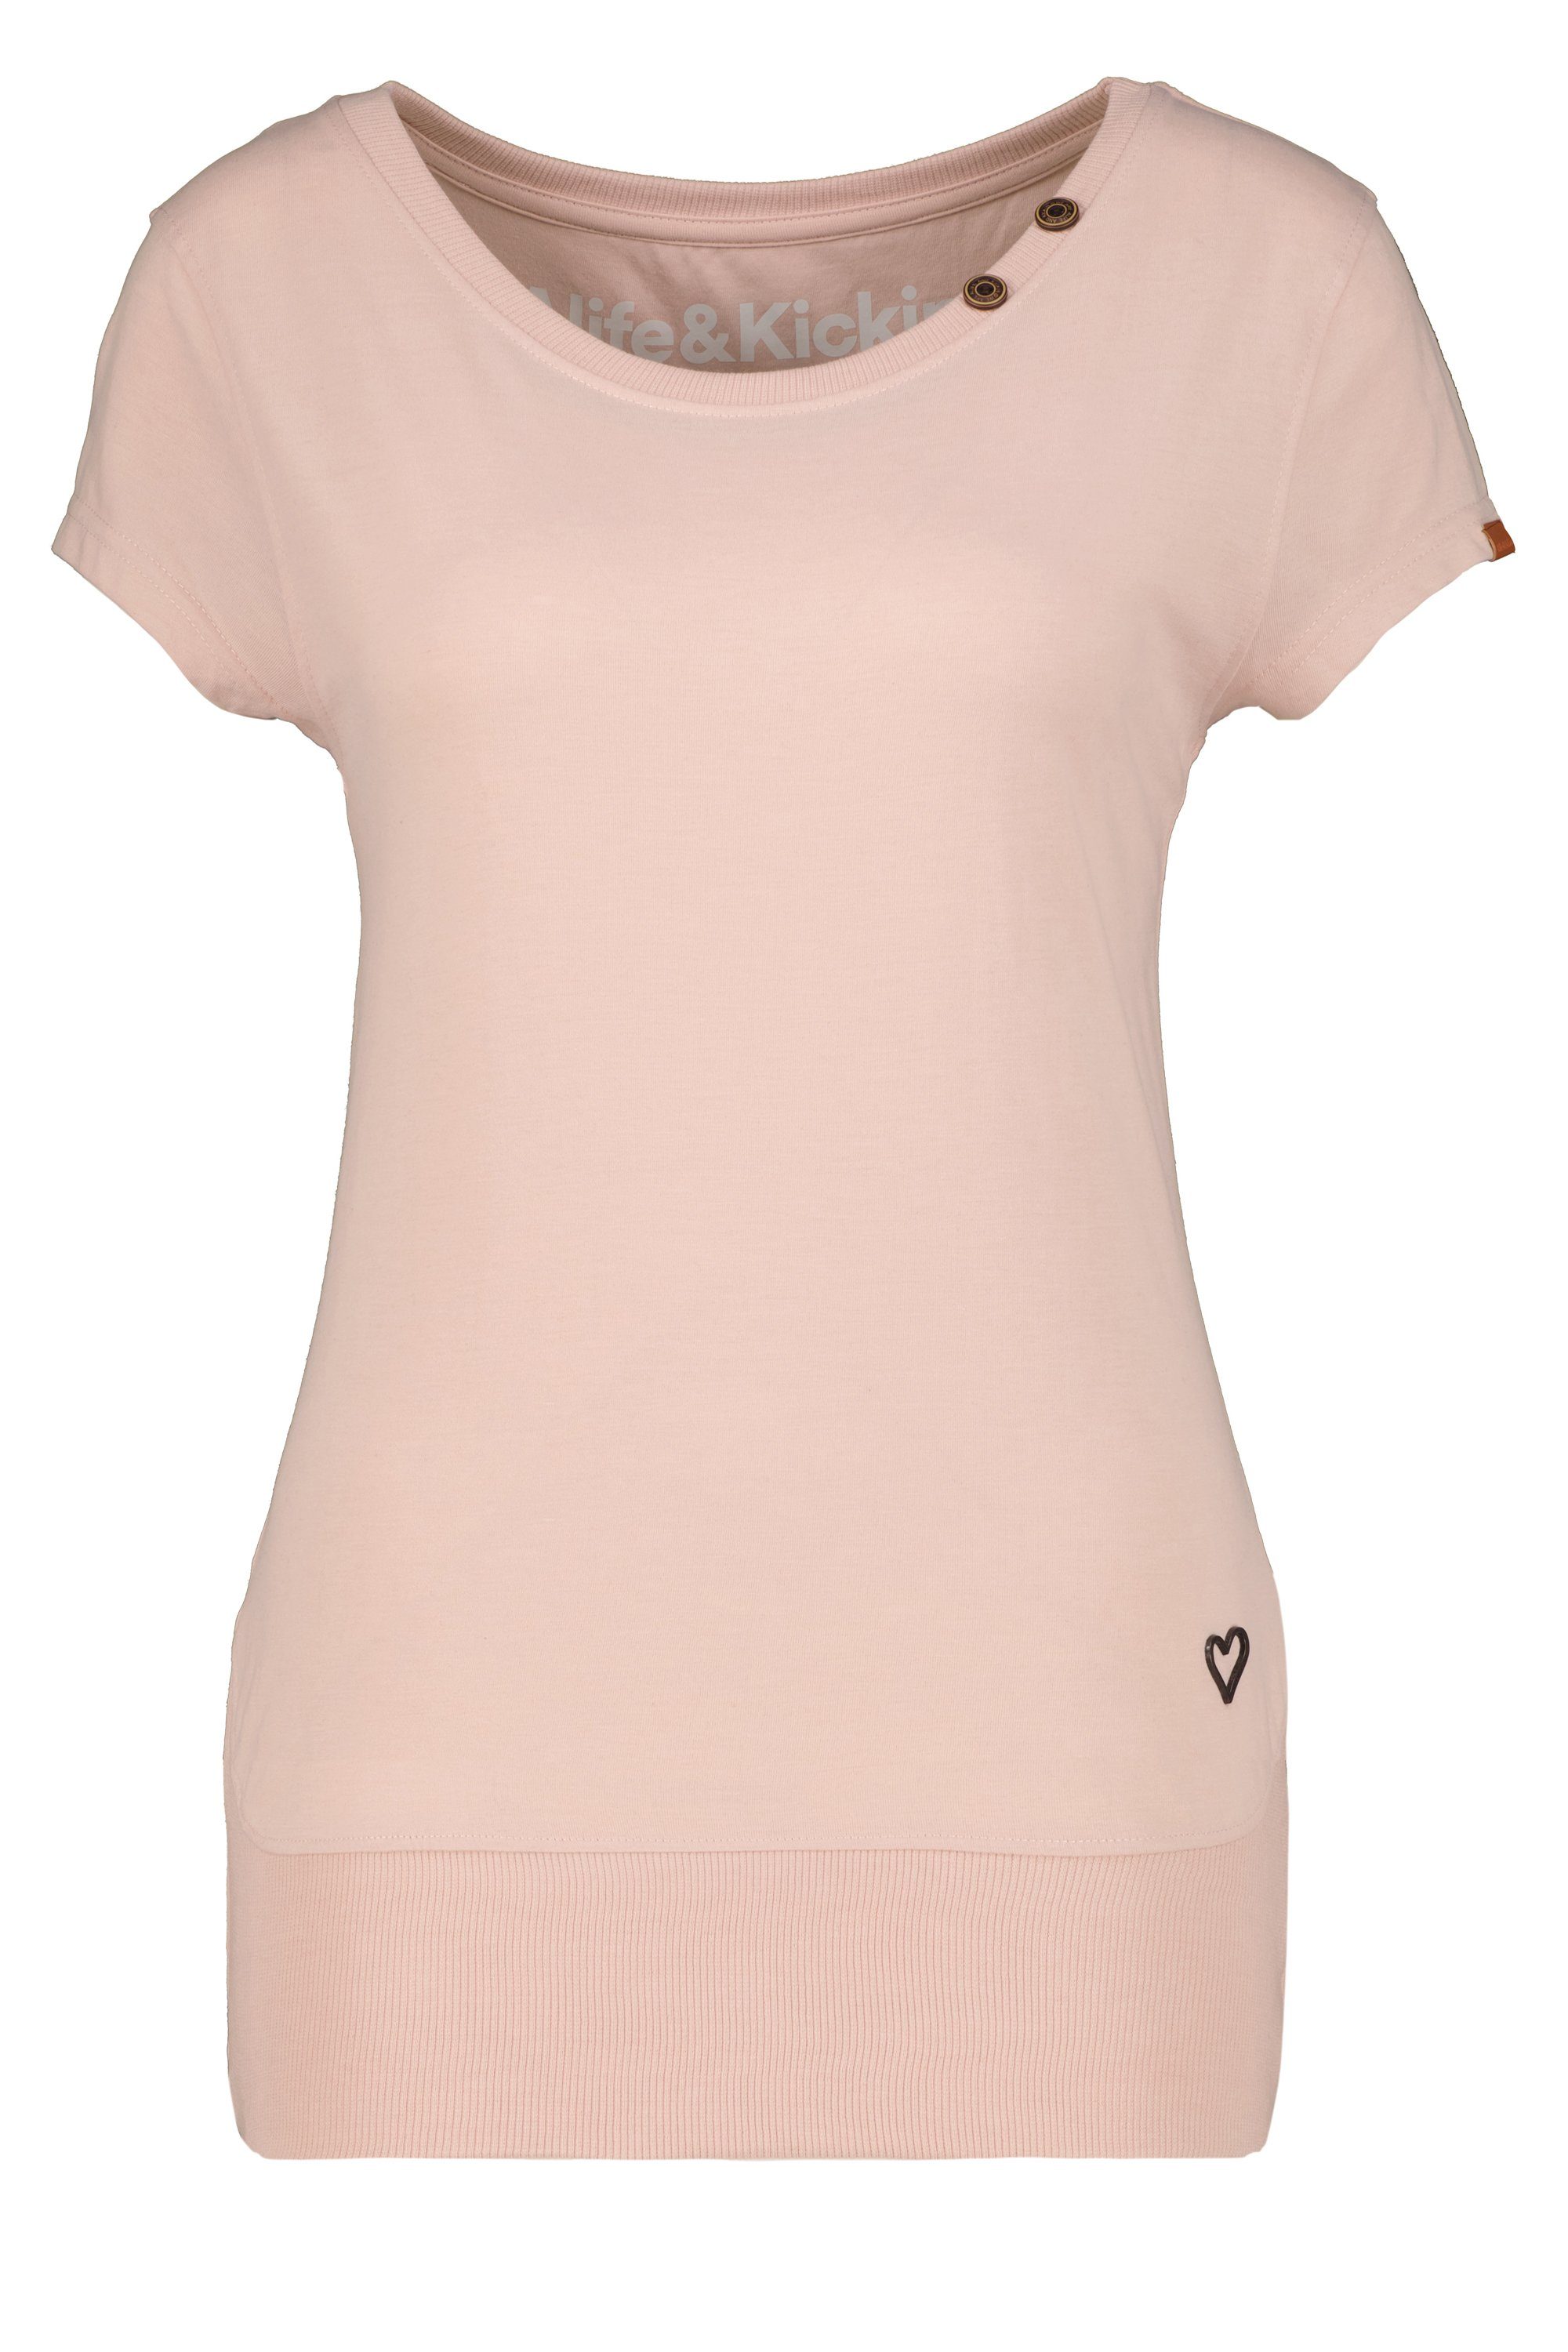 Alife CocoAK T-Shirt Shirt melange T-Shirt Damen A & Kickin blossom